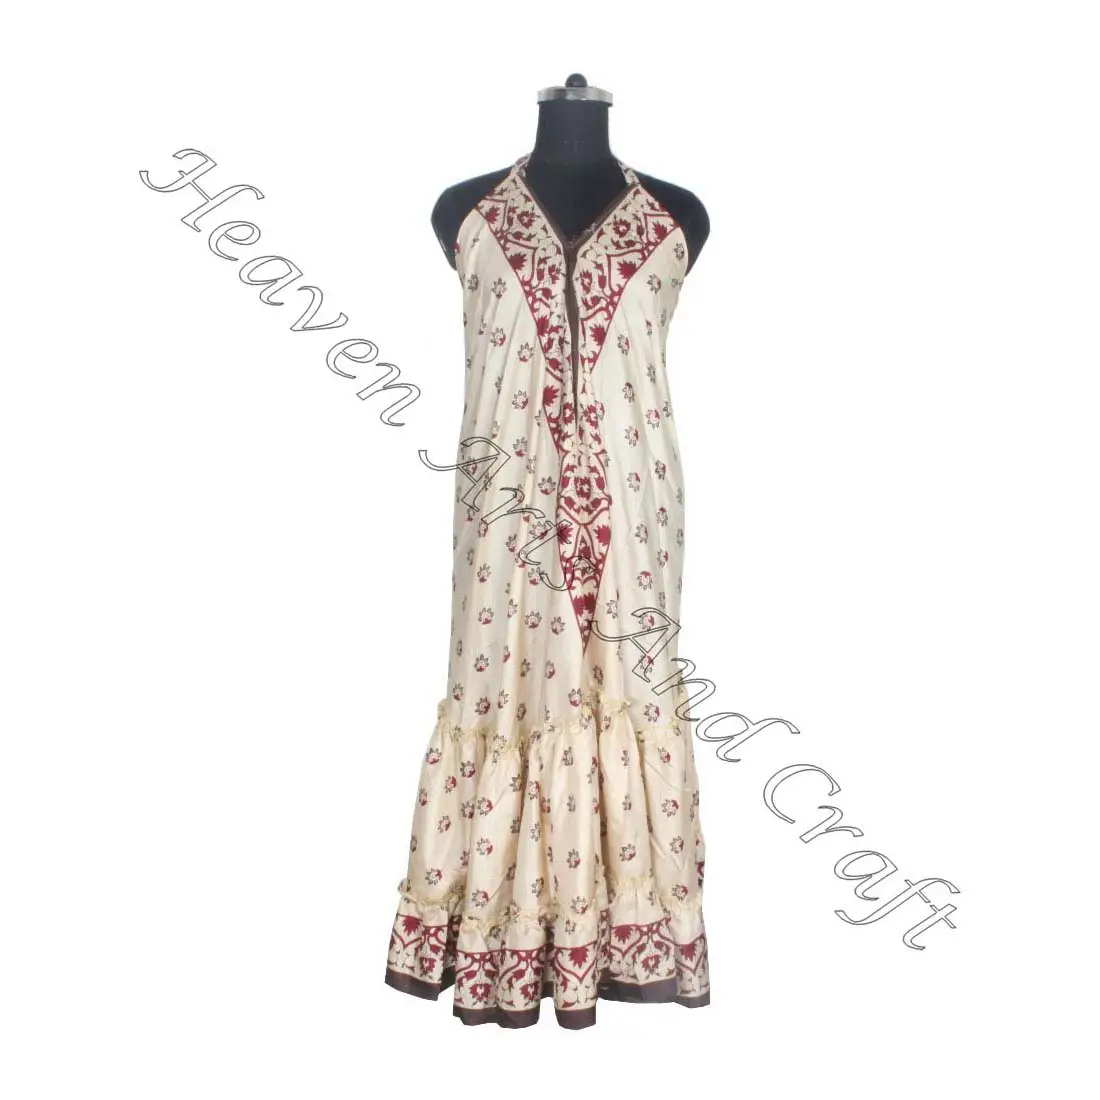 SD014 Saree / Sari / Shari Indian & Pakistani Clothing from India Hippy Boho Latest Traditional Long V-Neck Indian Vintage Sari